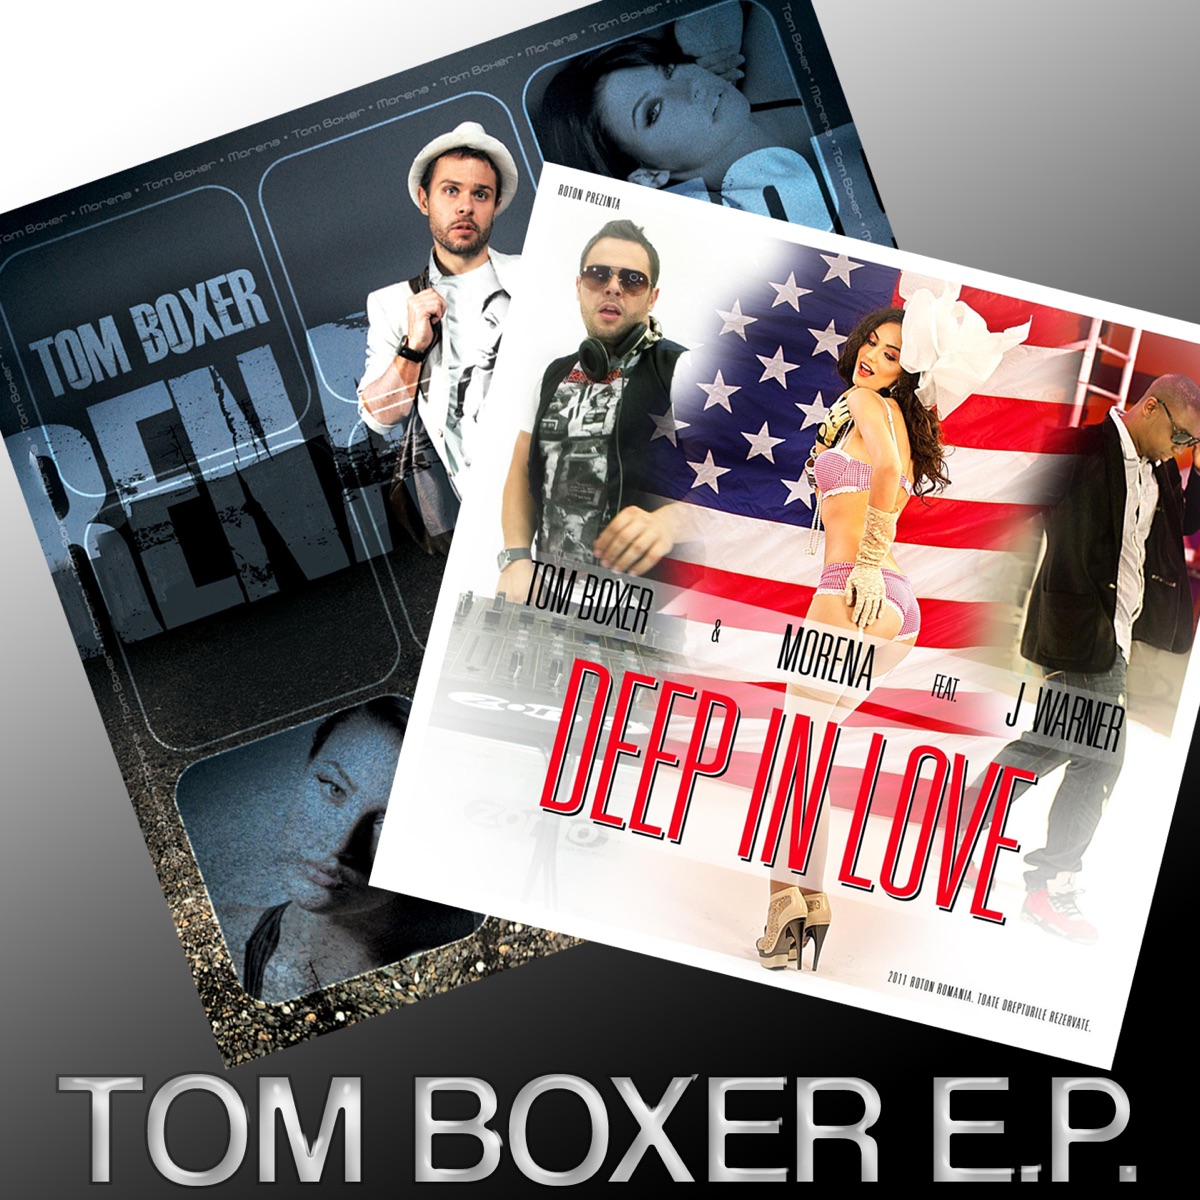 Tom Boxer E.P. - EP - Album di Tom Boxer - Apple Music